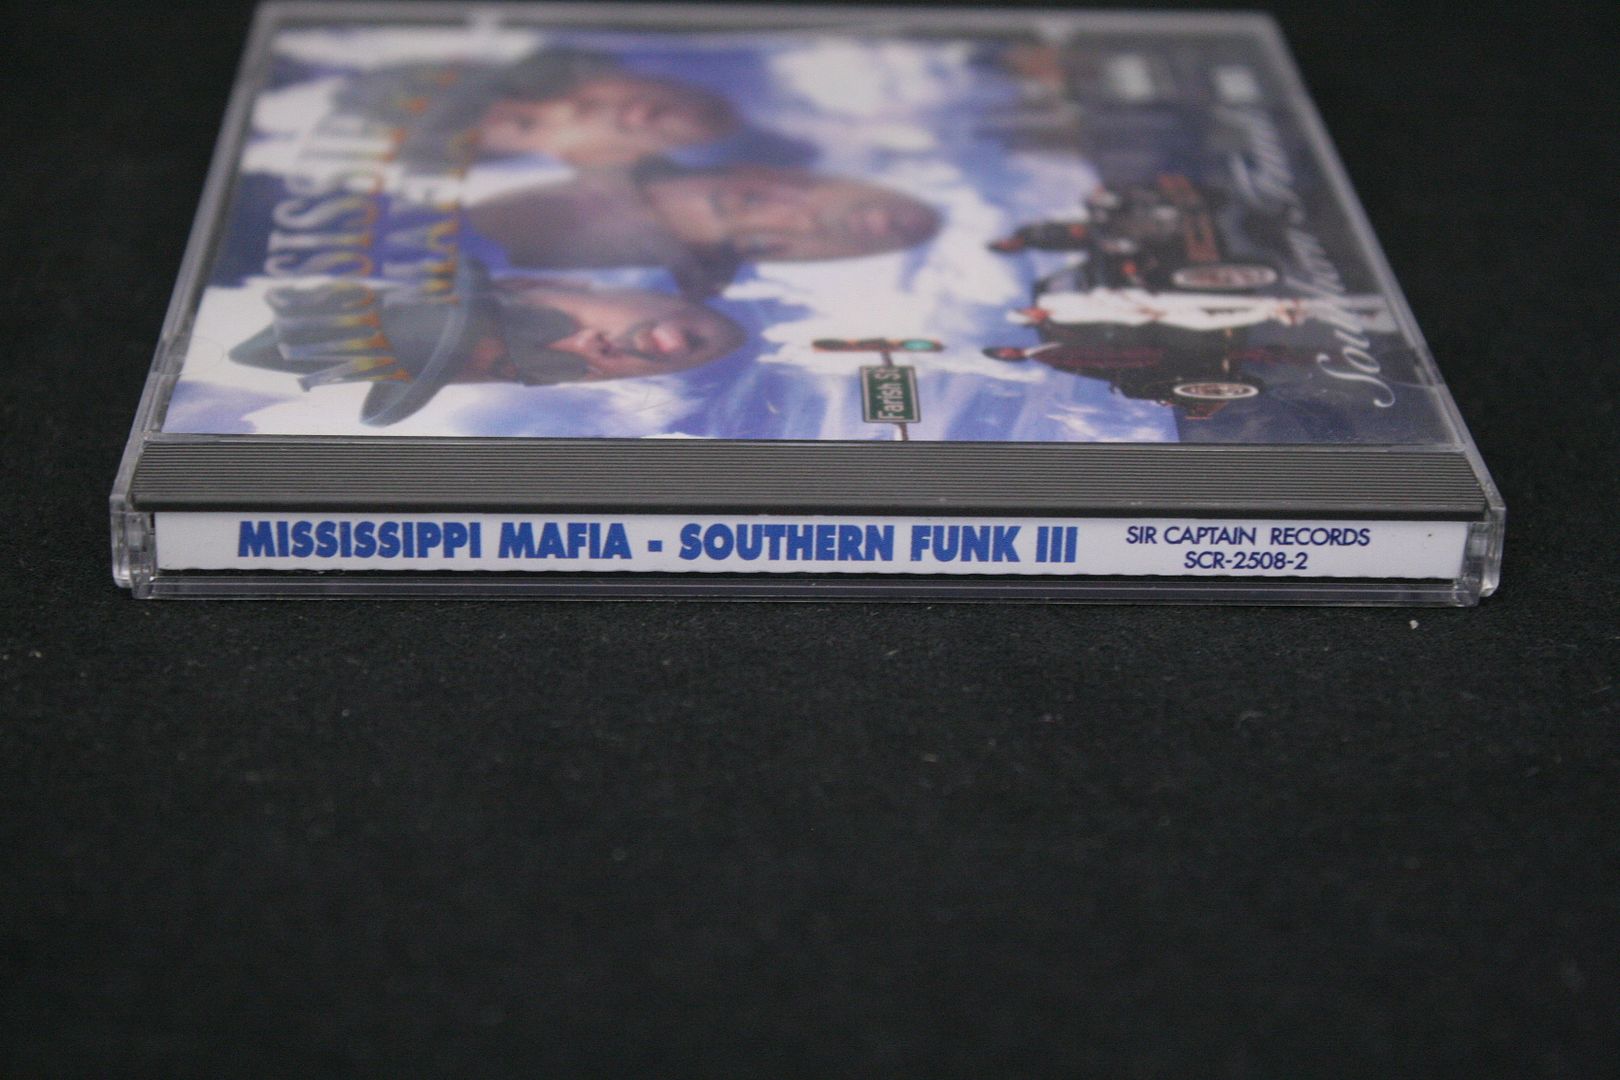 MISSISSIPPI MAFIA - SOUTHERN FUNK III DOWN SOUTH RAP CD! OOP,RARE,G